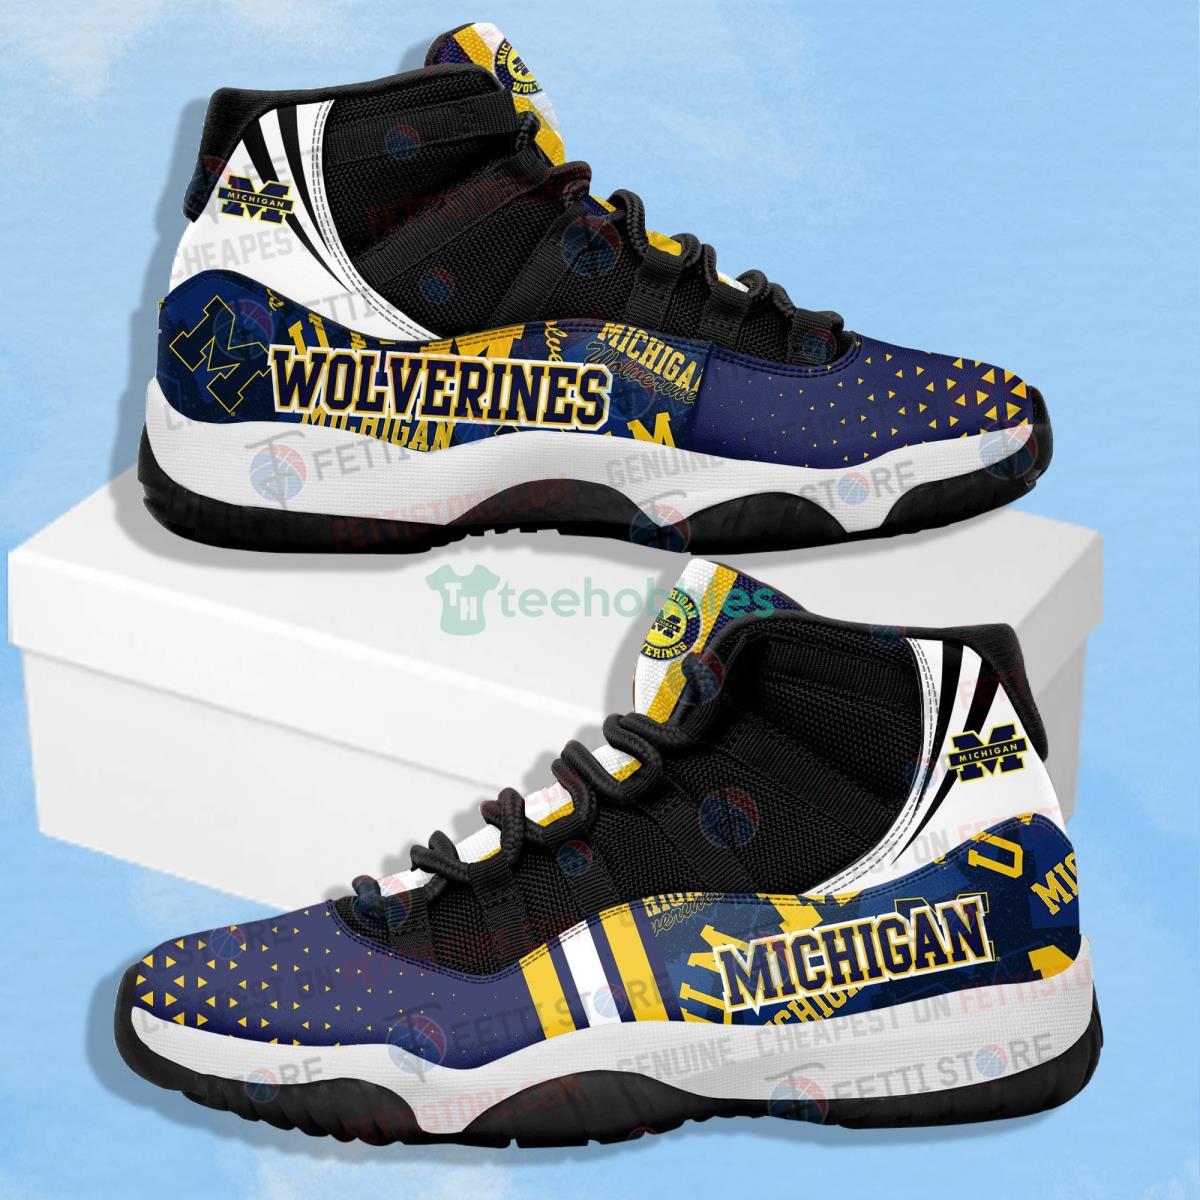 Michigan Wolverines Cool Pattern Print Impressive Design Air Jordan 11 Shoes Product Photo 1